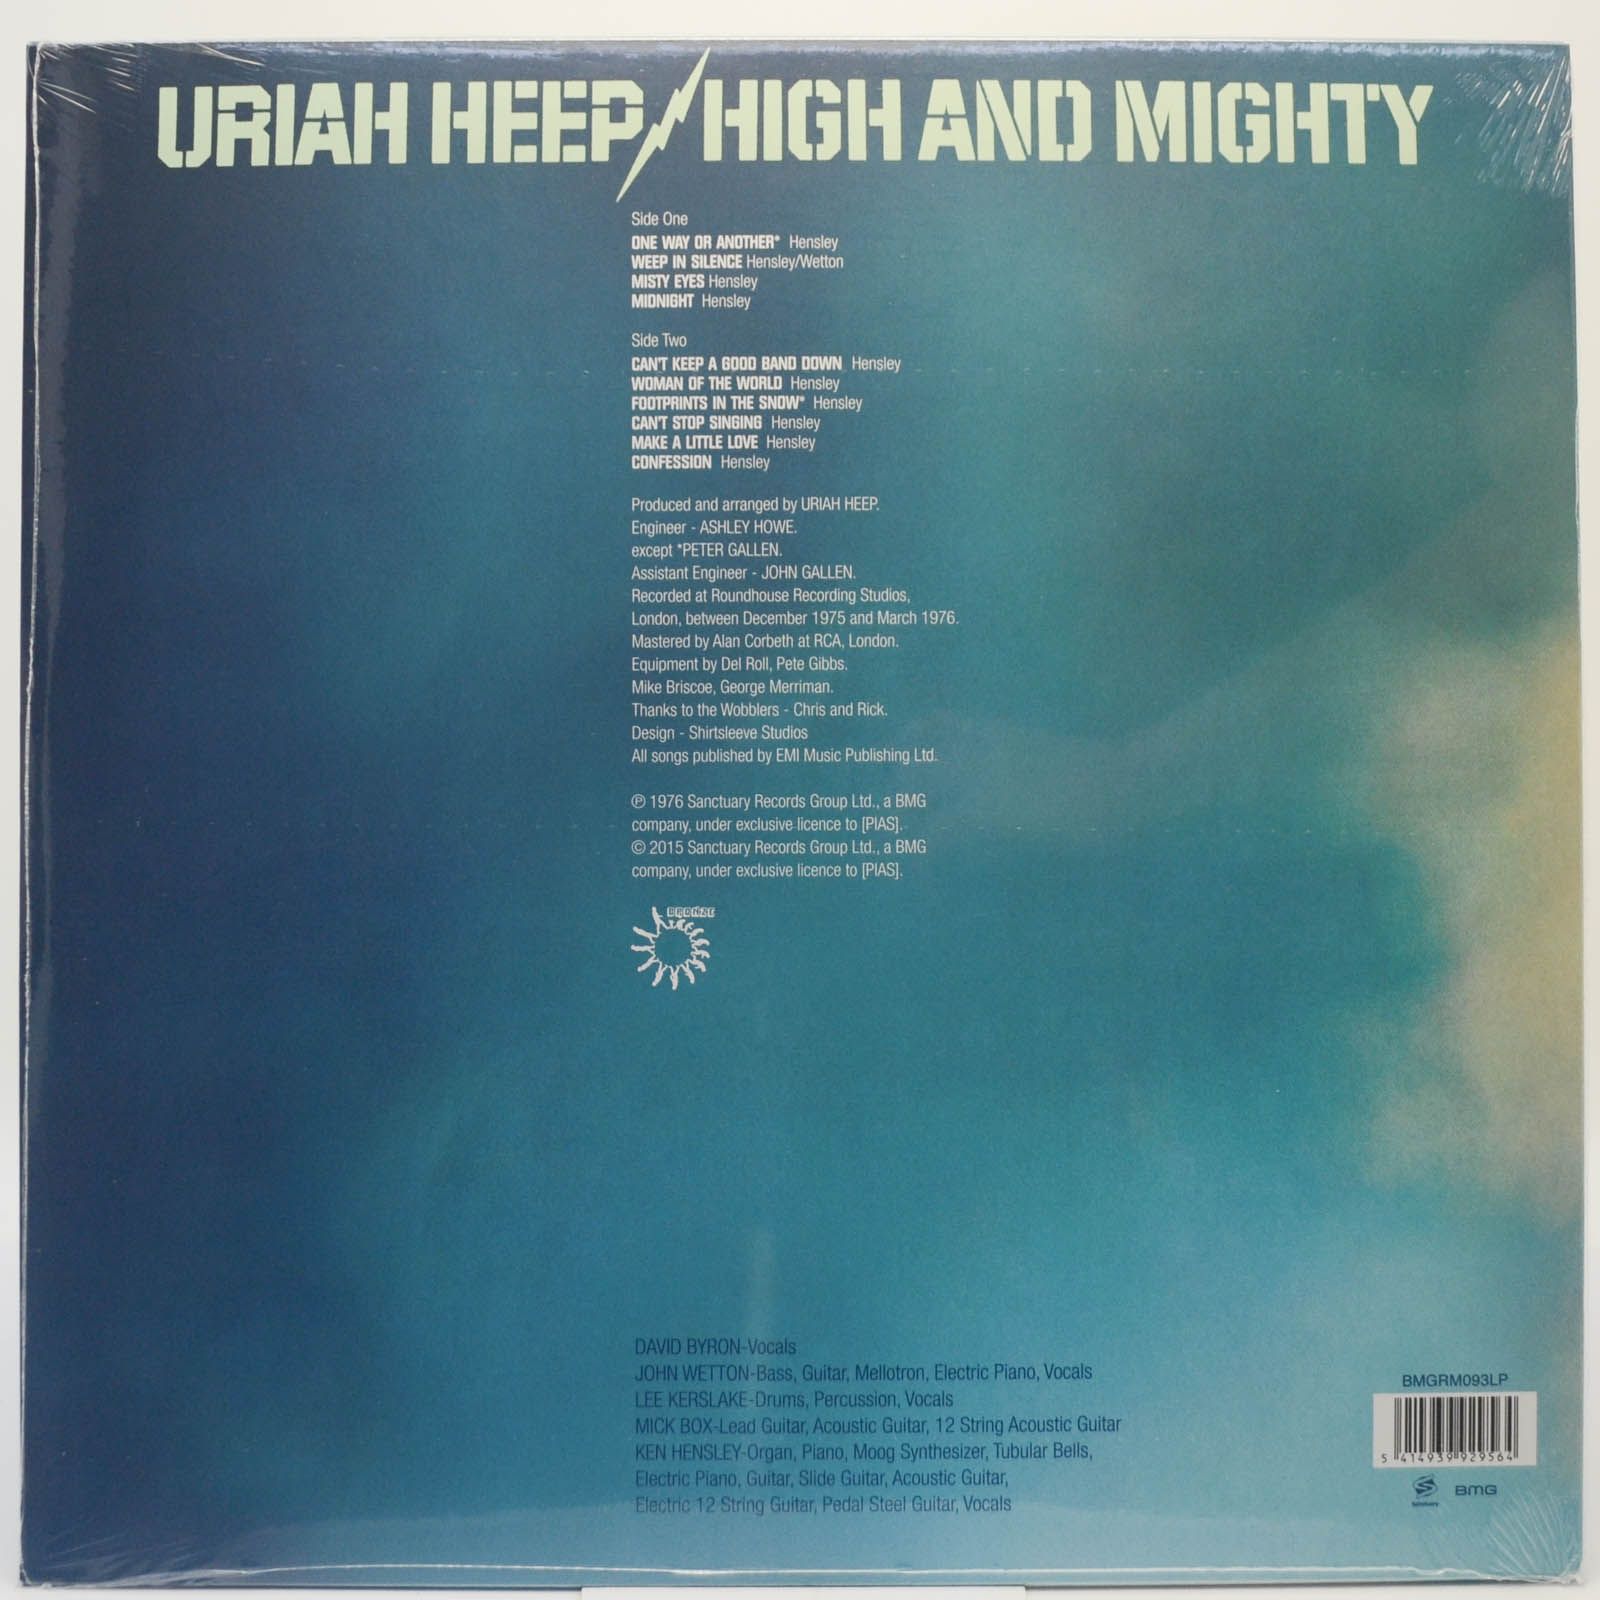 Uriah Heep — High and Mighty (UK), 1976